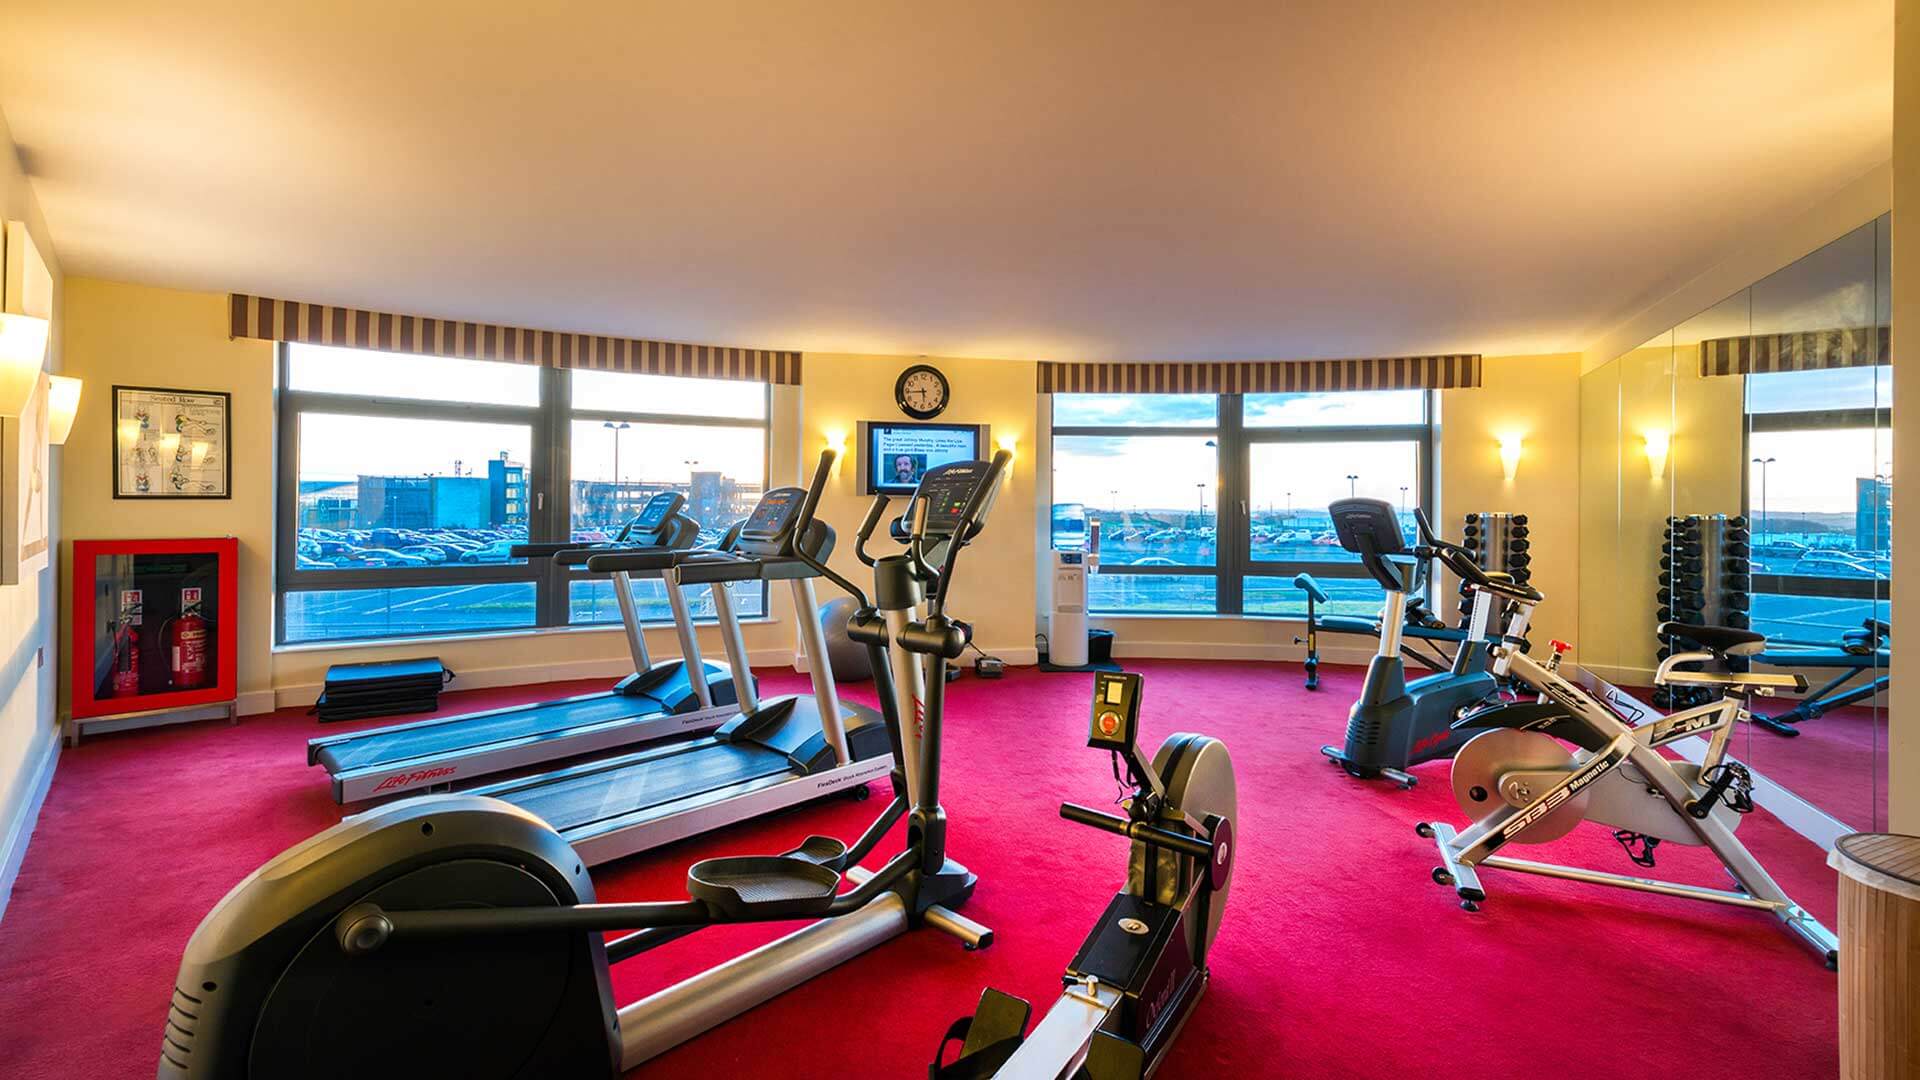 Gym equipment in the Cork International Hotel